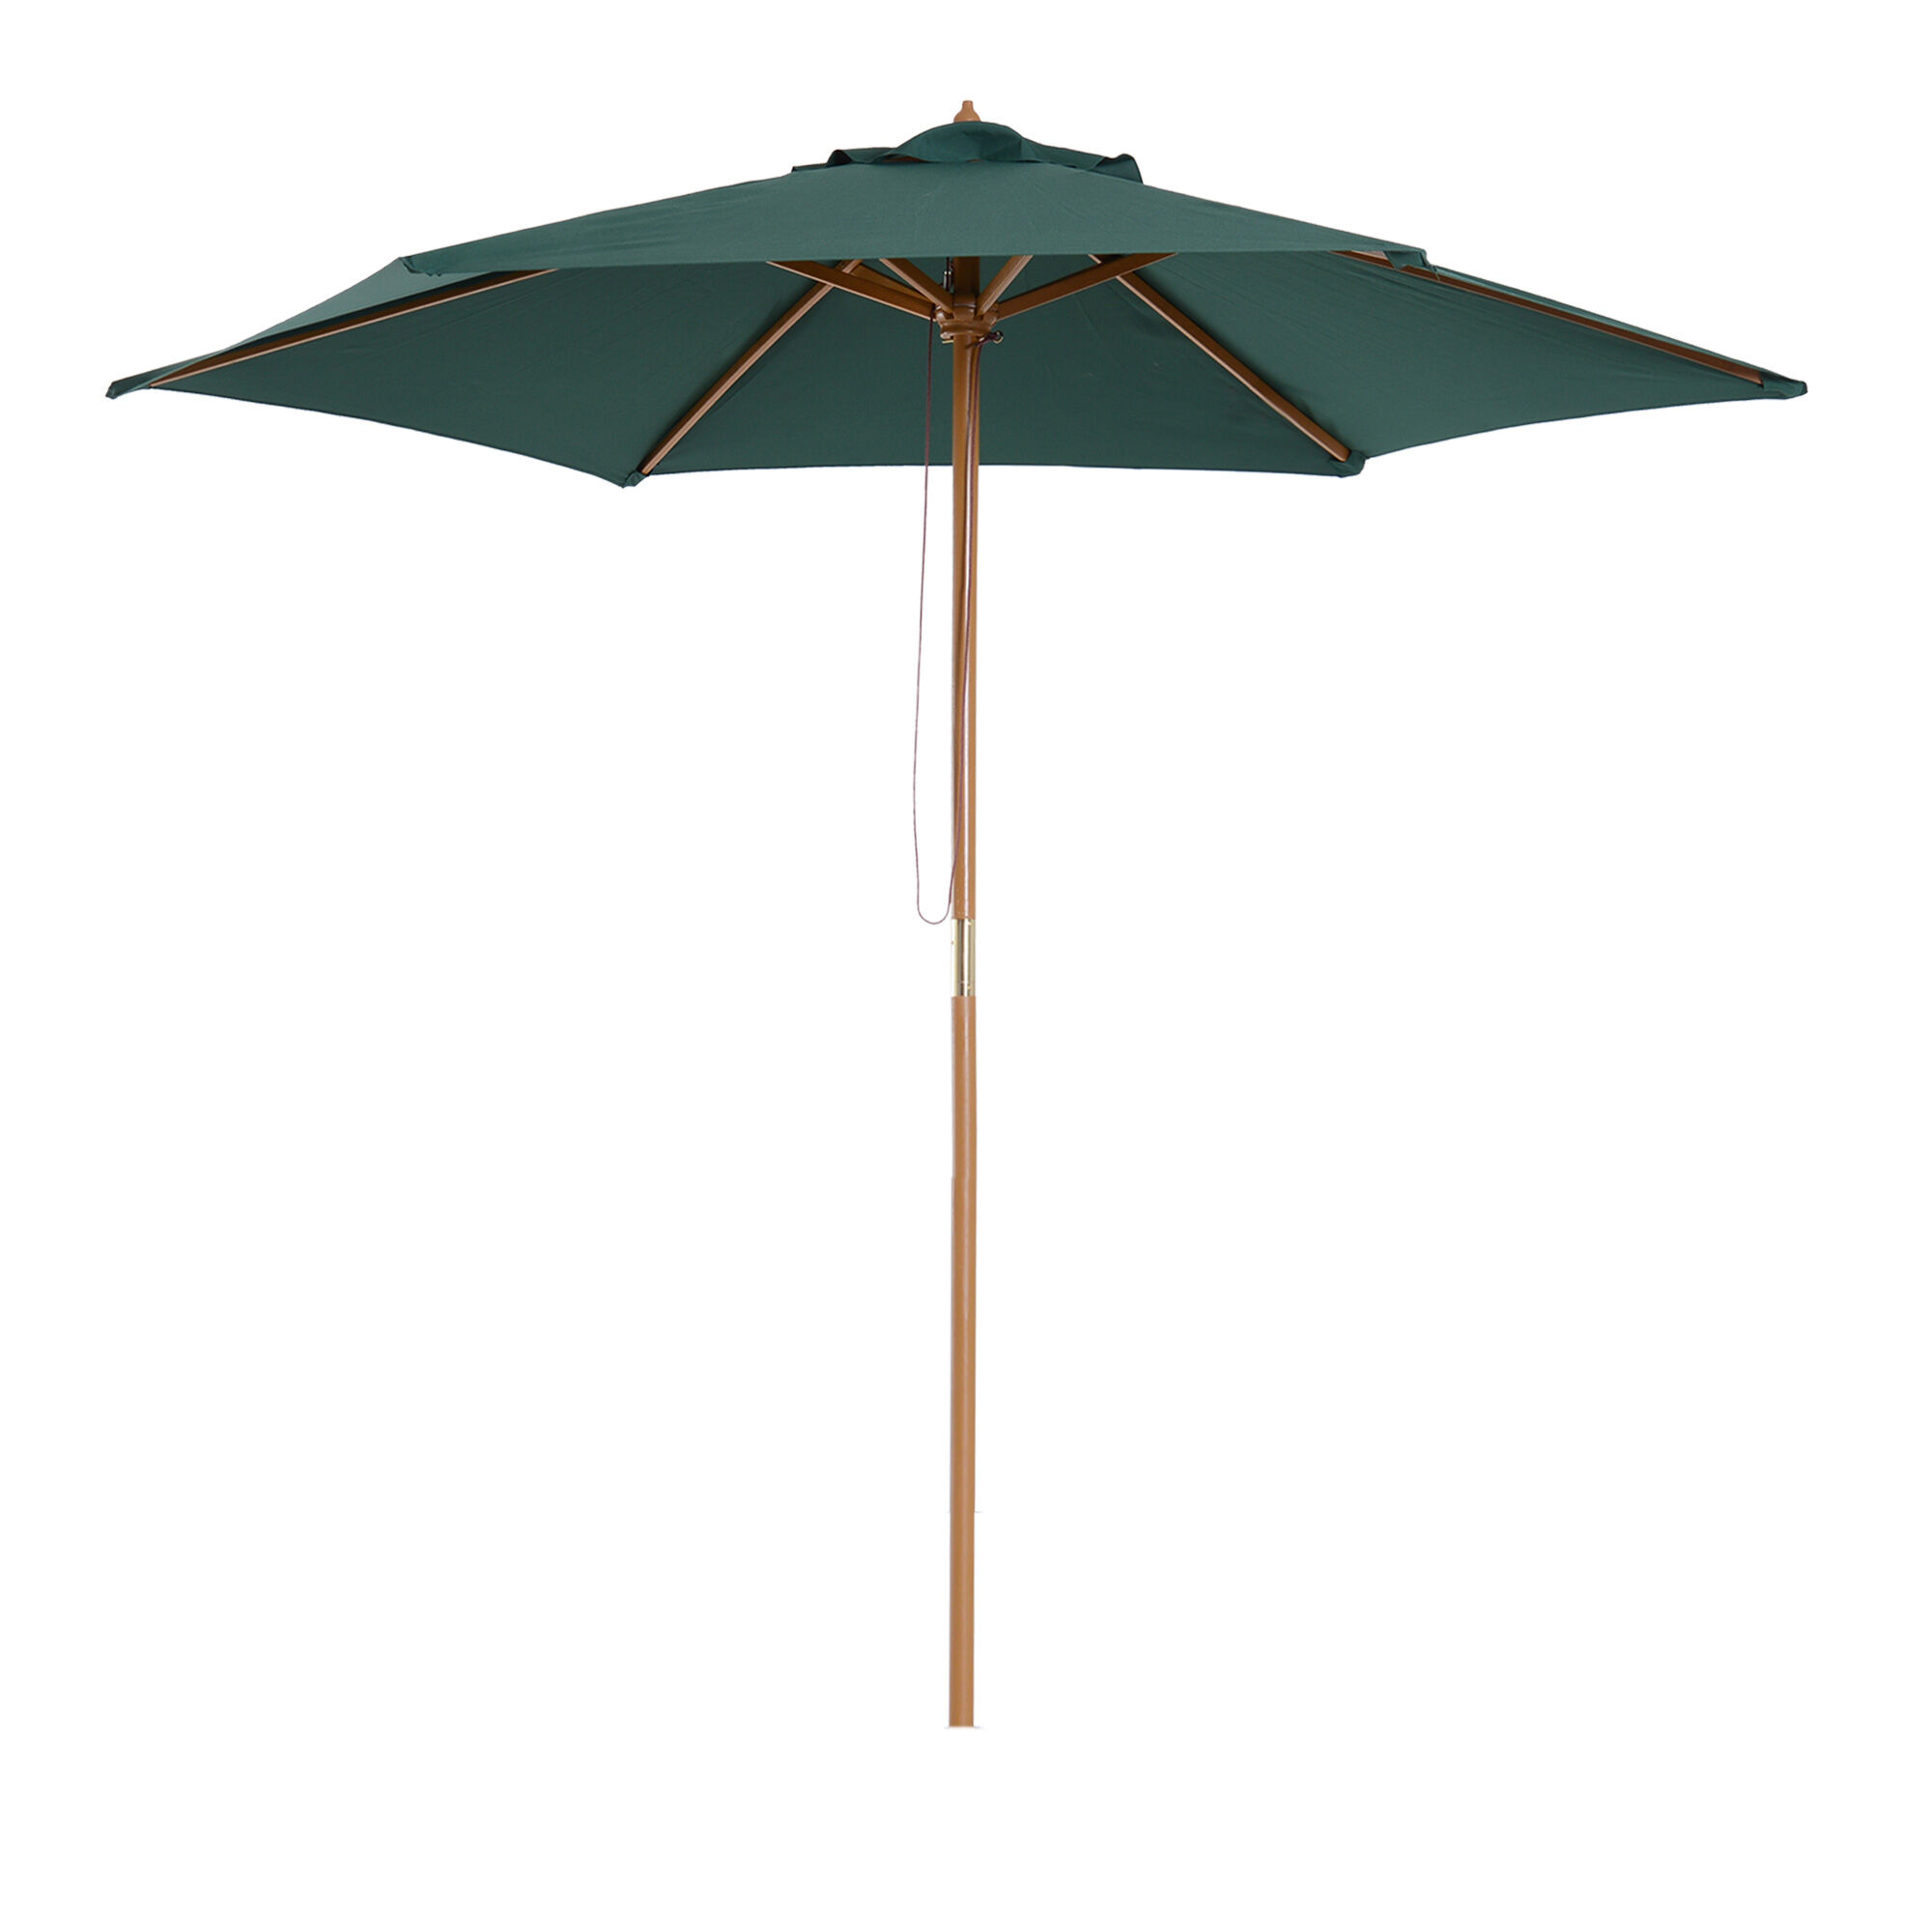 Outsunny 2.5m Wooden Garden Patio Parasol, Dark Green, UV Protective Outdoor Umbrella with Easy Pulley System